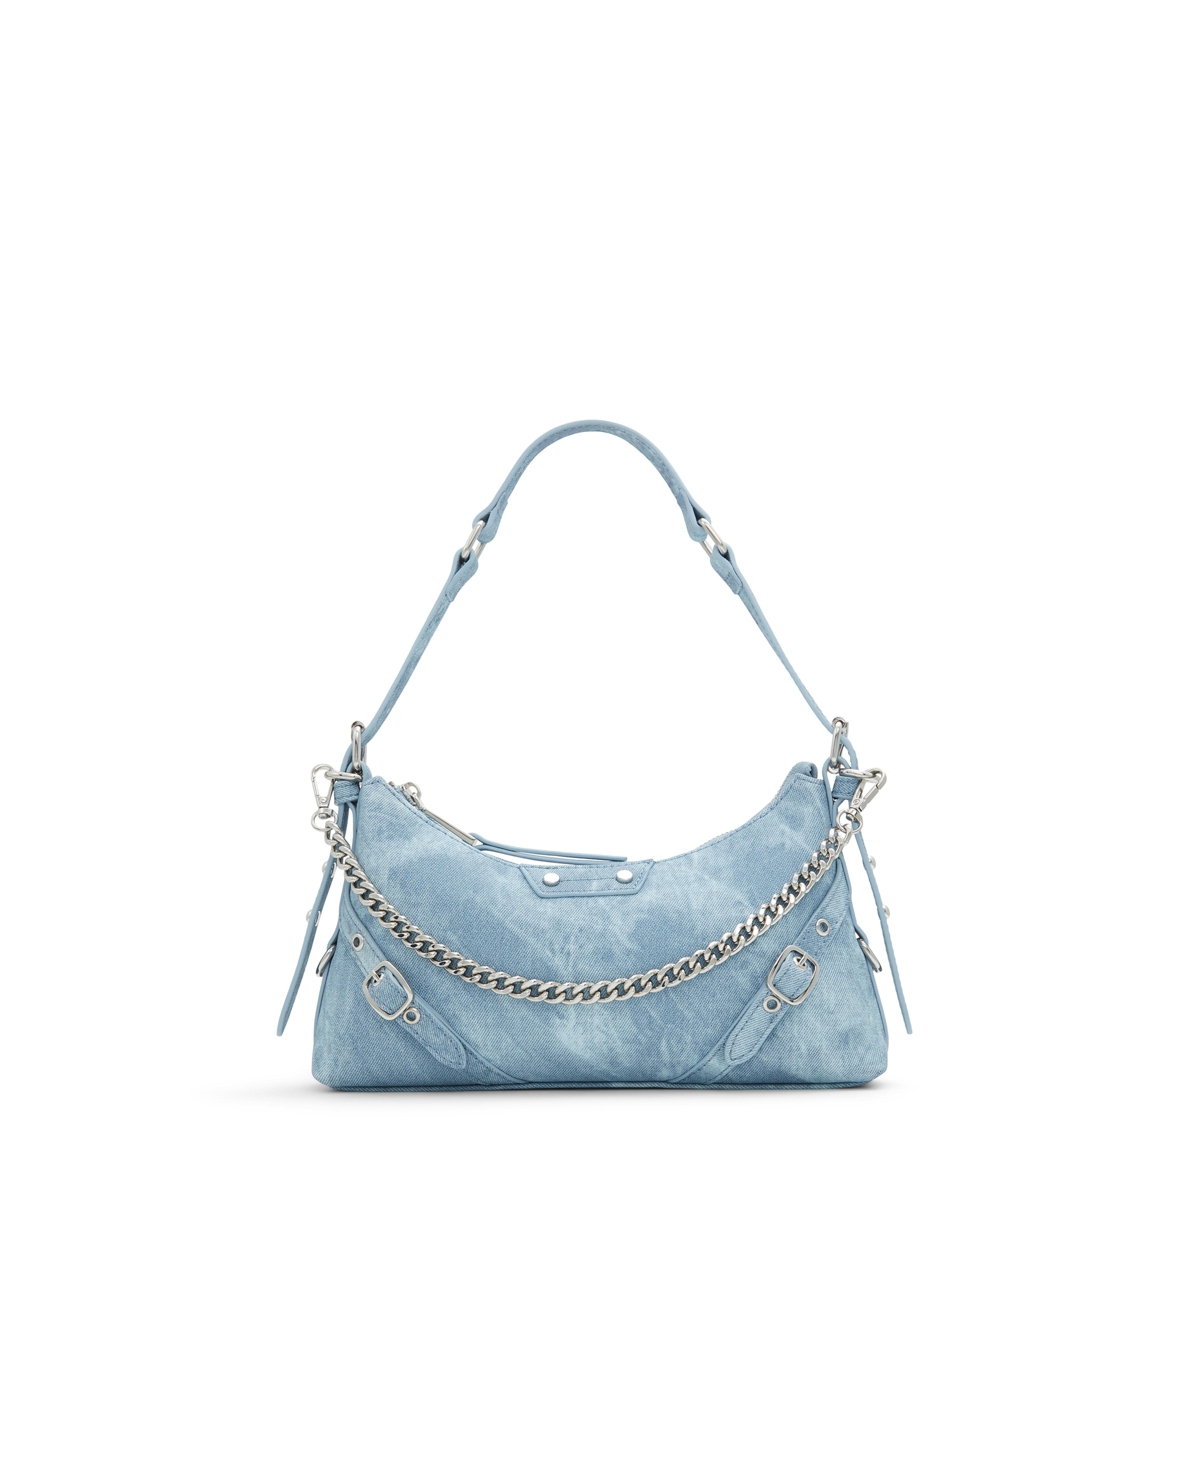 Faralaeliax Women's City Handbags - Blue